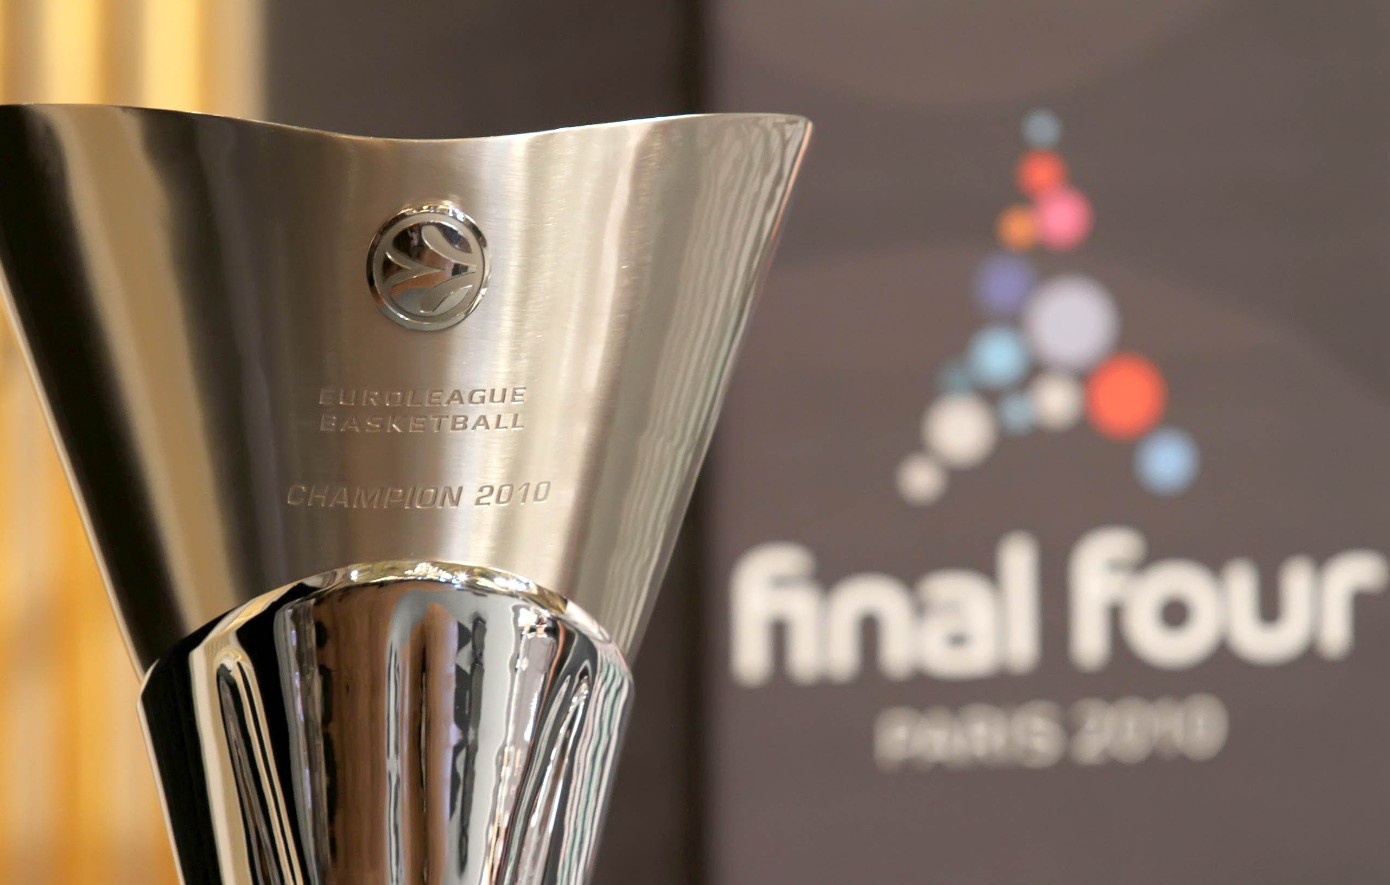 Euroleague: Τρελή πρόταση από το Άμπου Ντάμπι για να γίνουν εκεί τα επόμενα Final 4